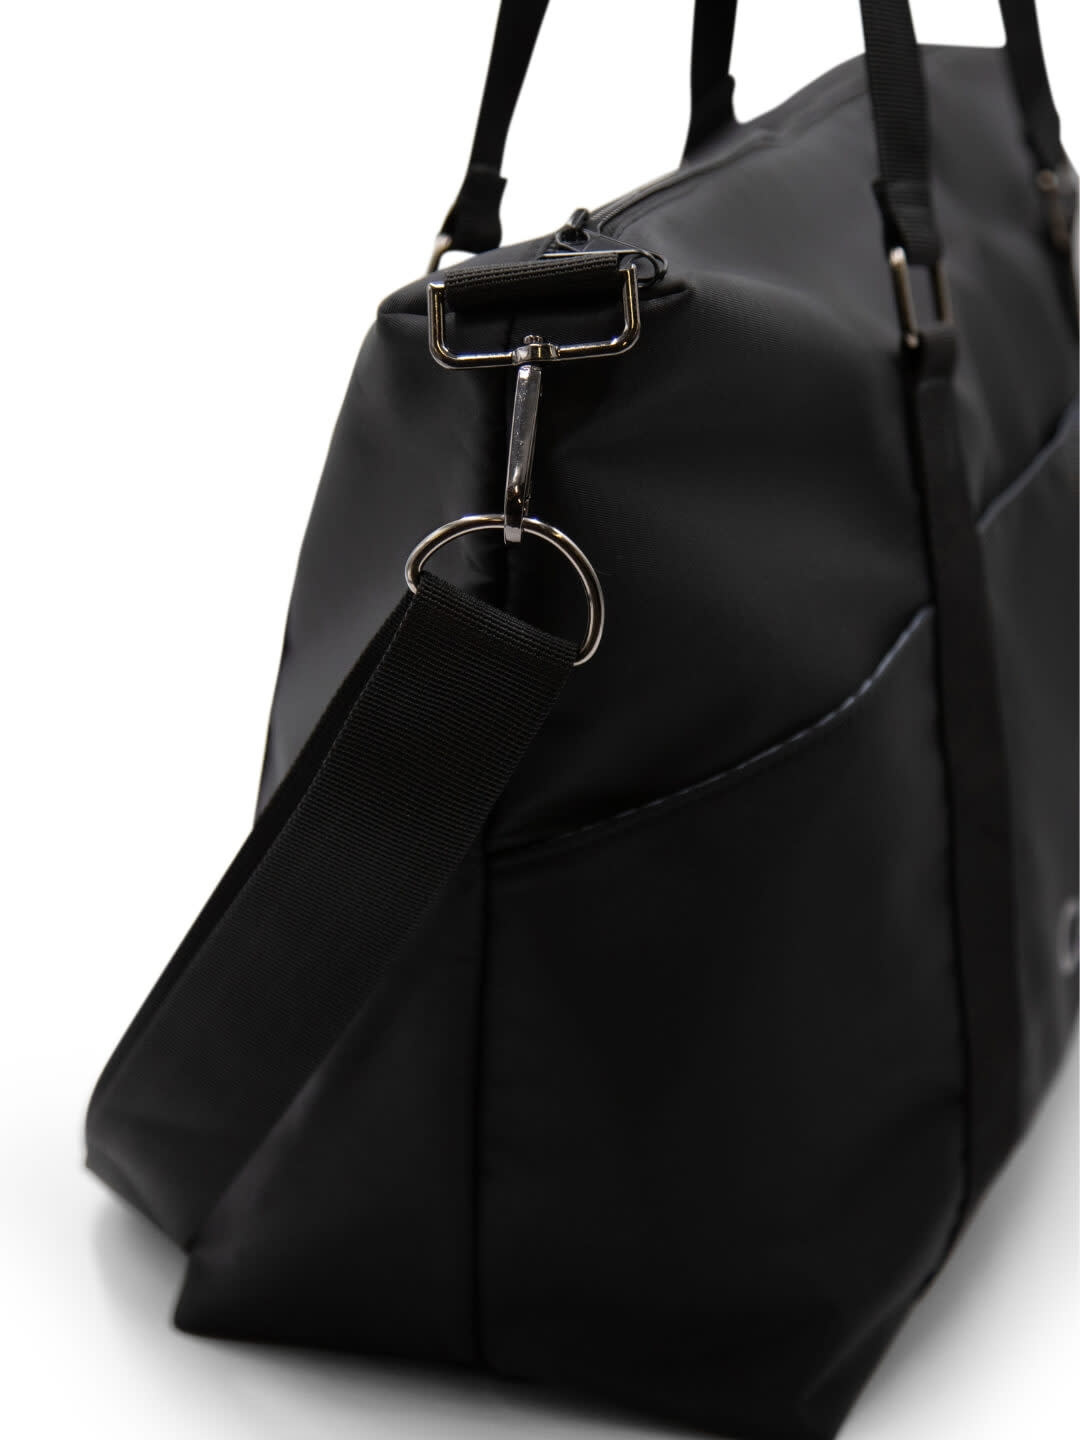 Capezio B311- Casey Carry-All Duffle Bag